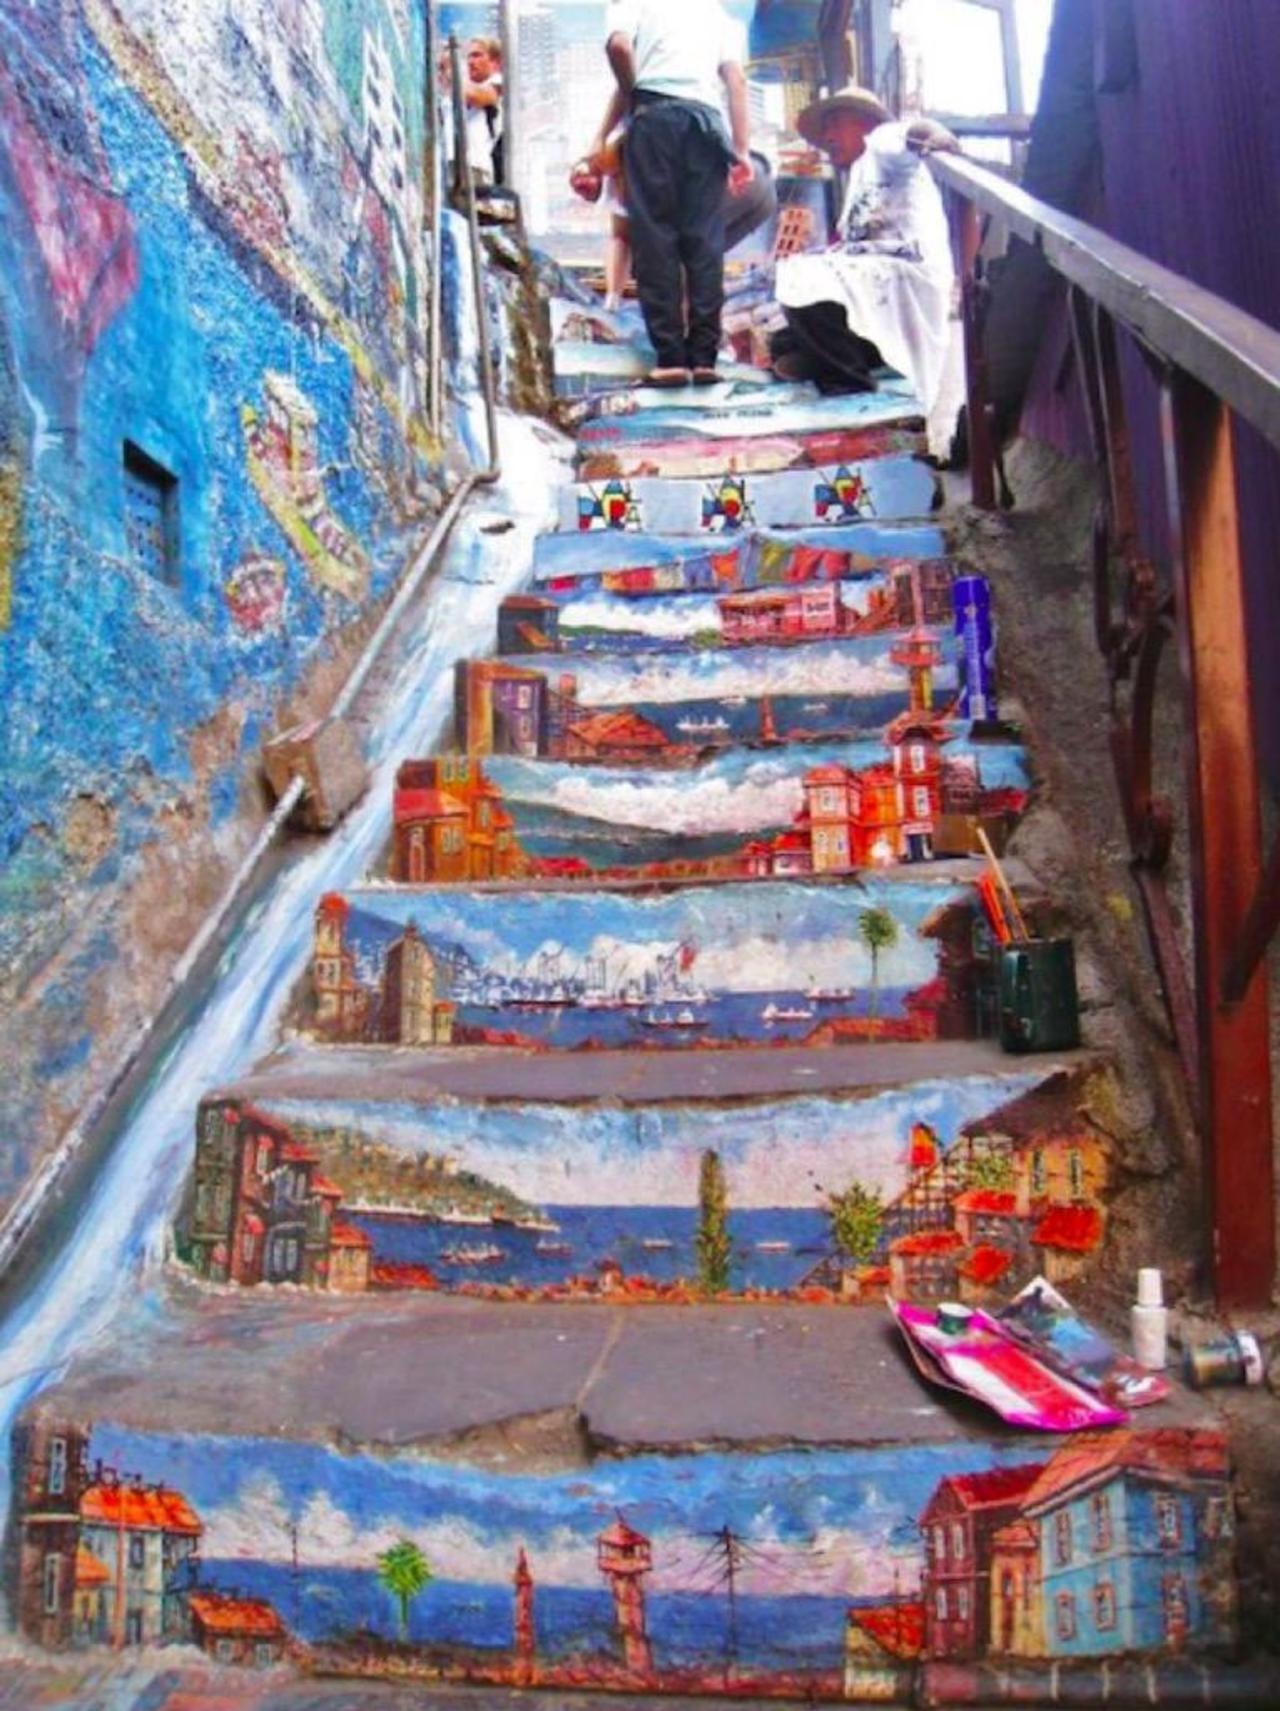 #switch stairs into #colourful #streetart #Chile #bedifferent #graffiti #arte #art http://t.co/ACNJI2Axan